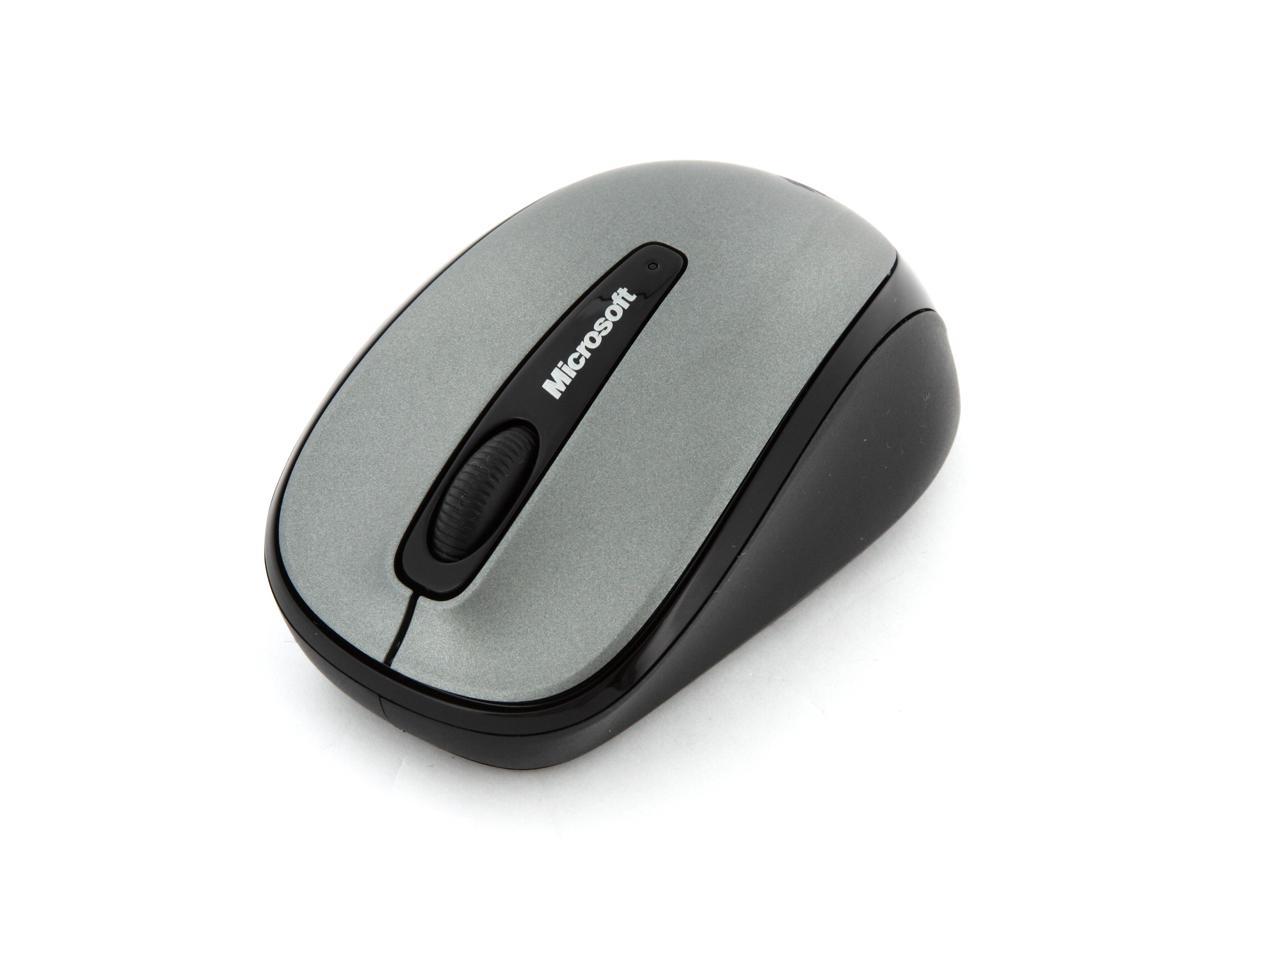 microsoft wireless mouse 3500 software